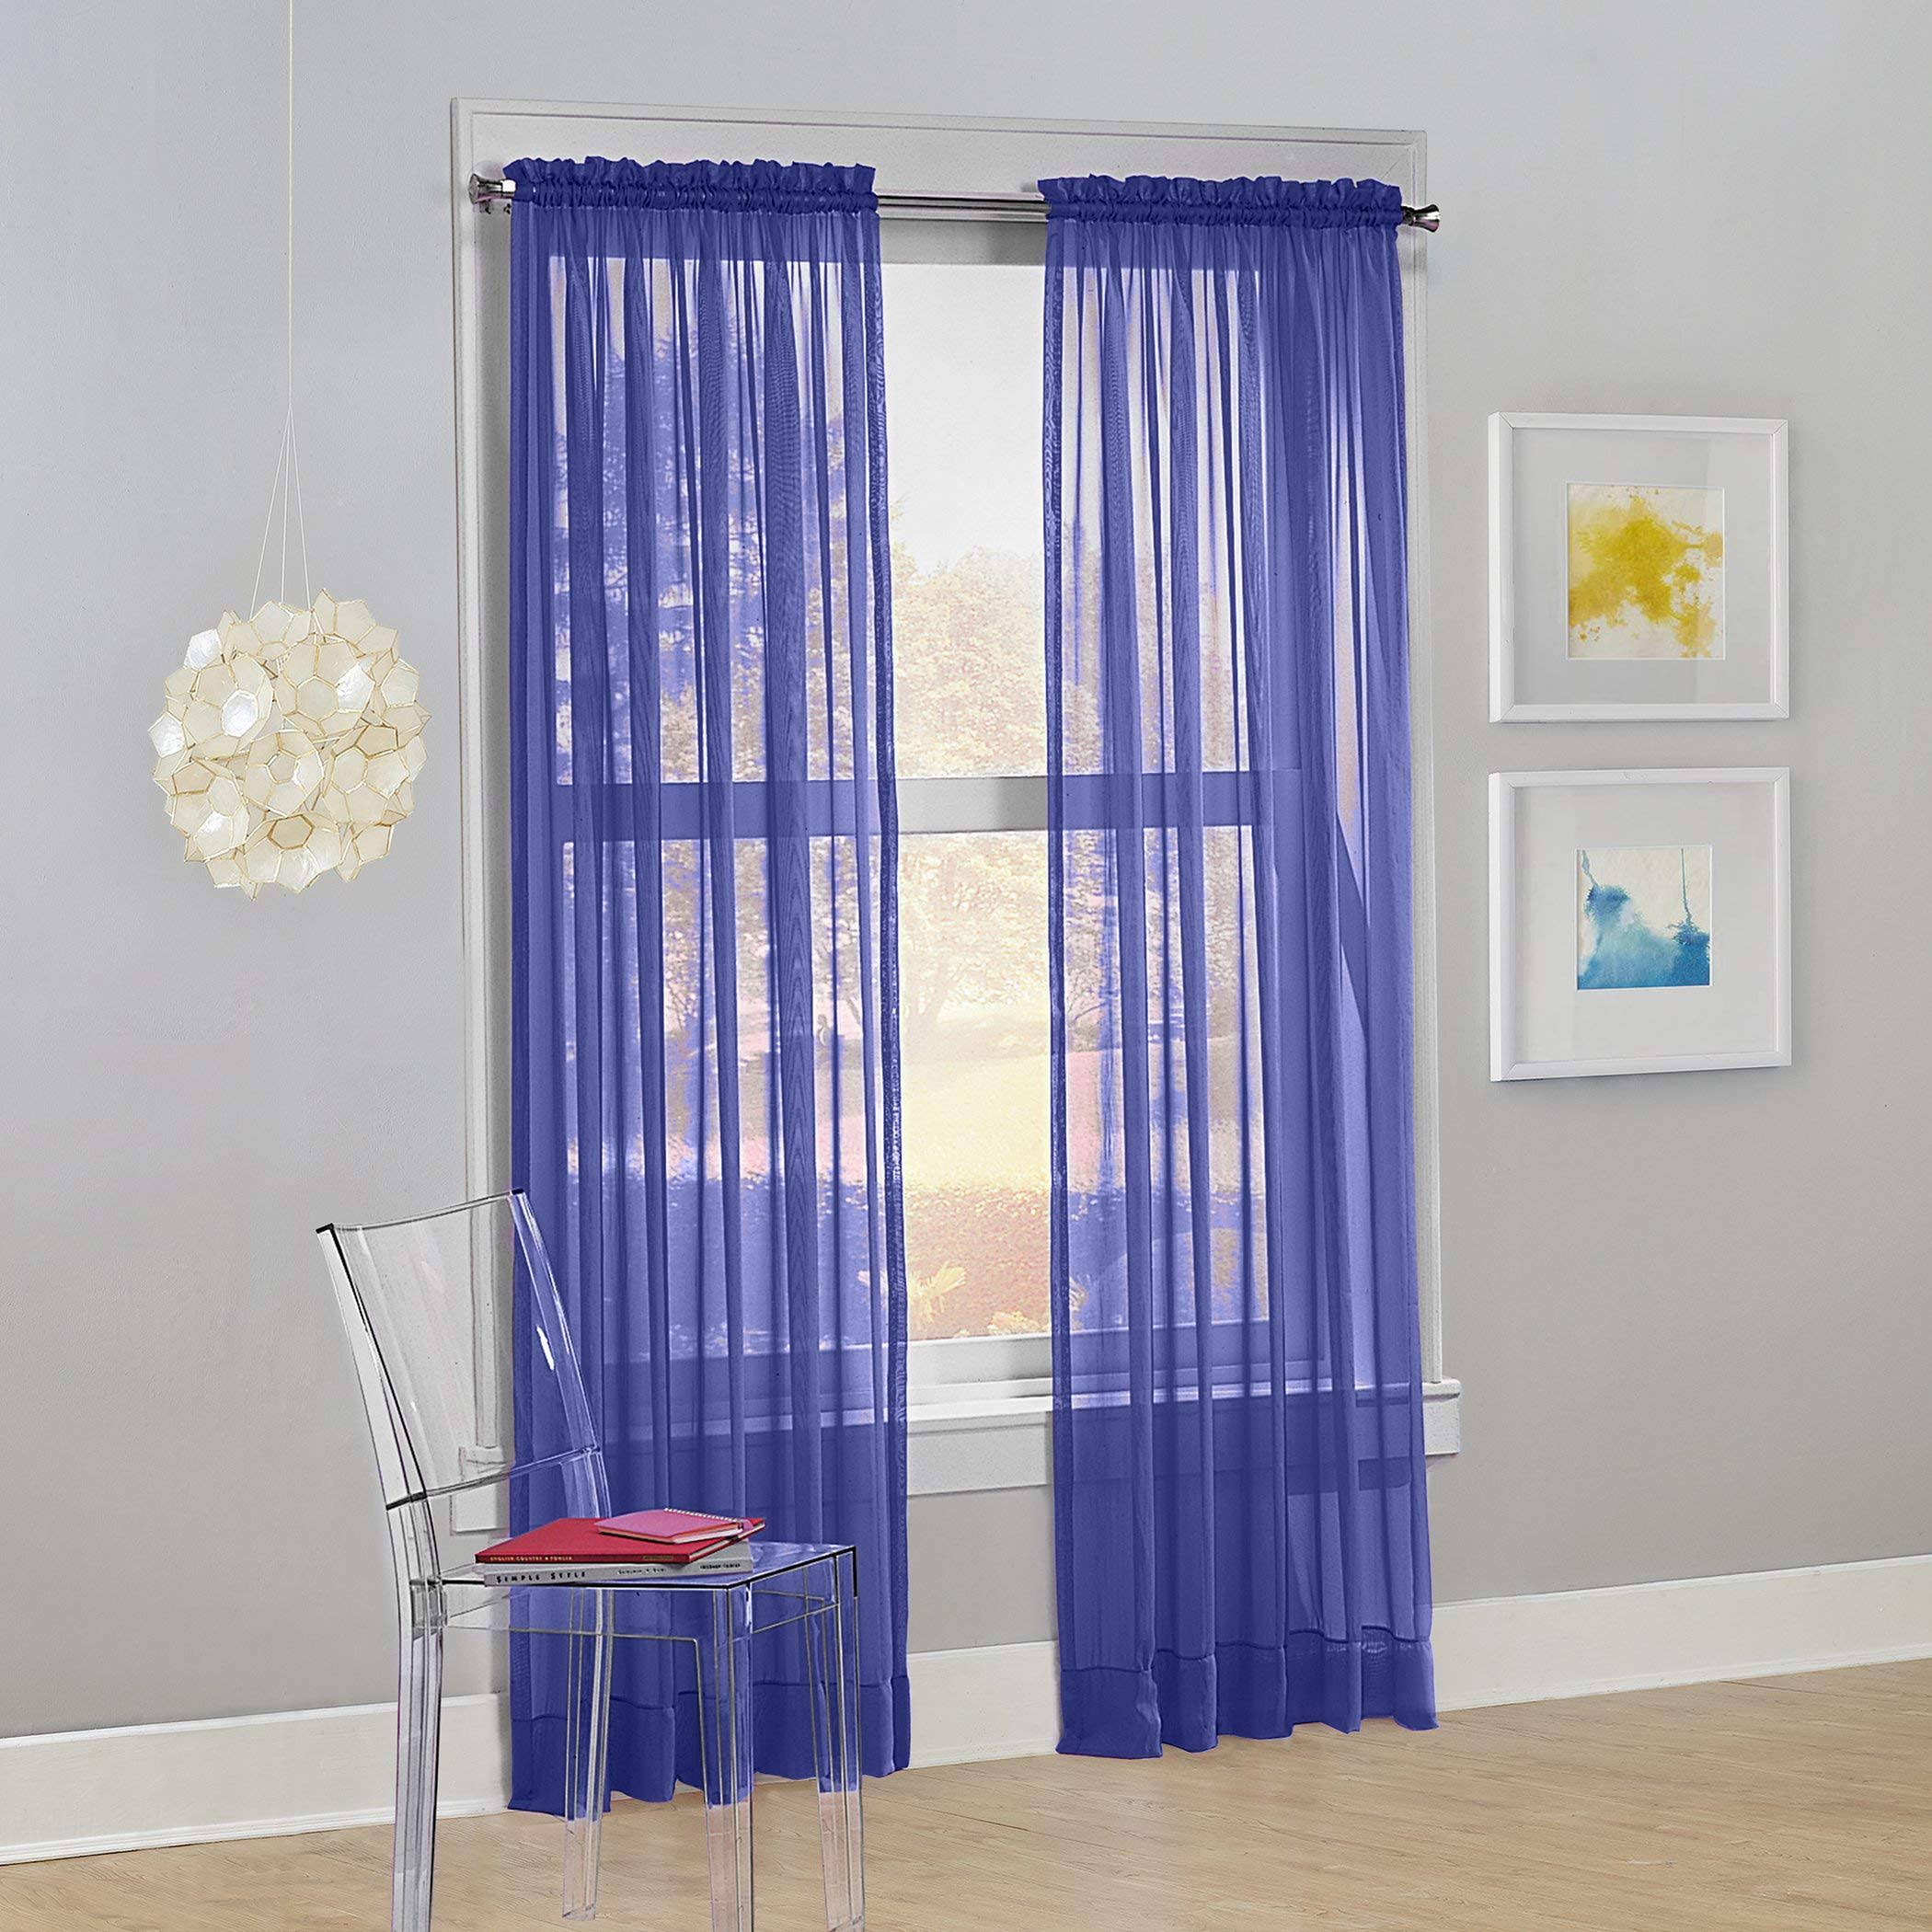 No. 918 Calypso Sheer Voile Rod Pocket Curtain Panel, 59" x 63", Purple